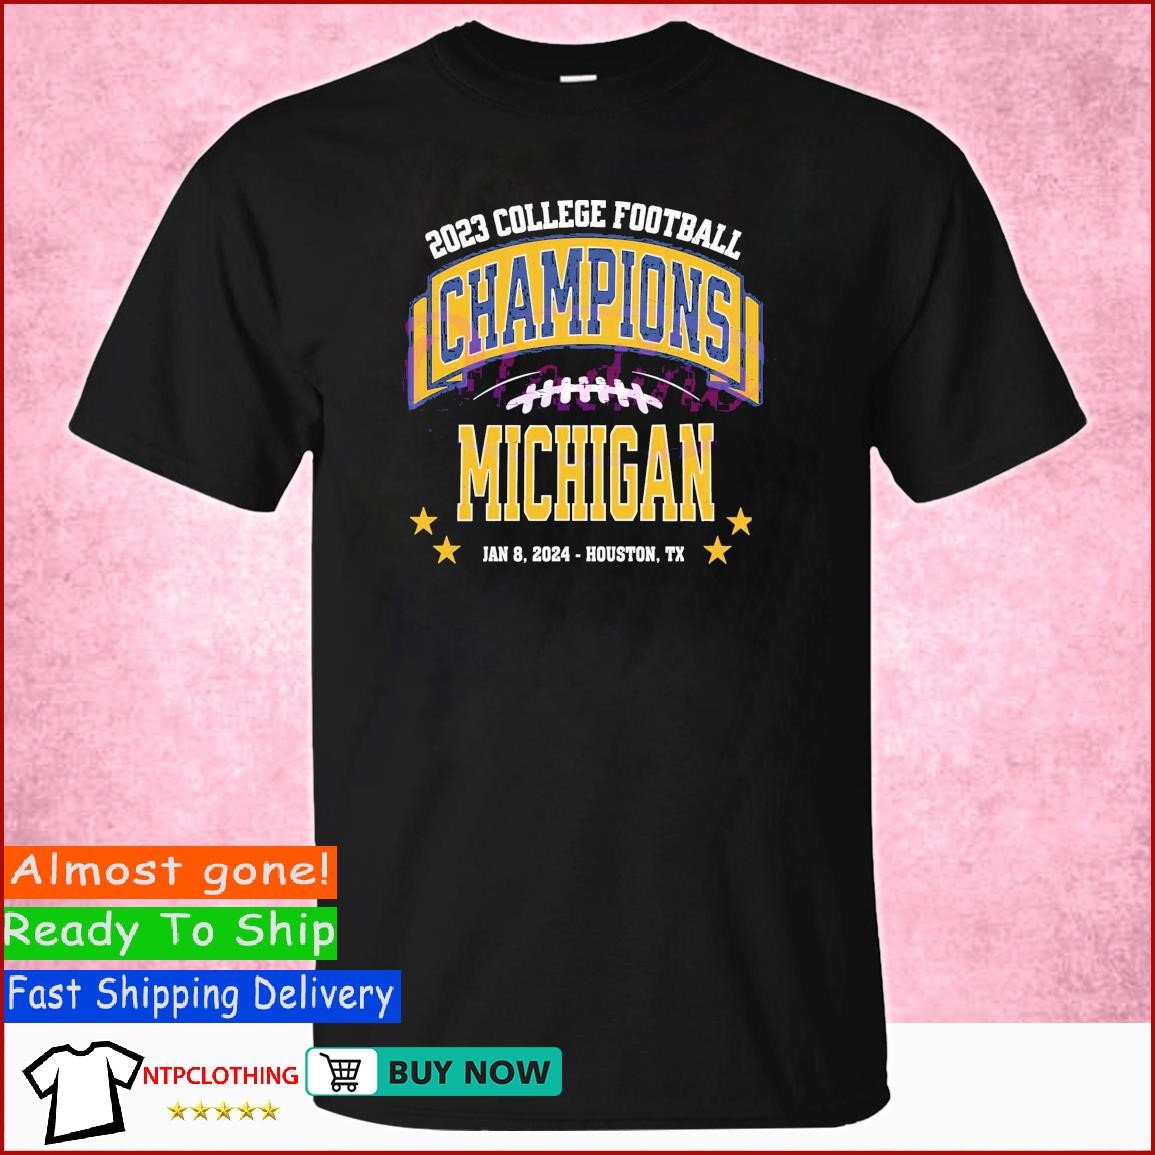 College Football Champions Michigan Jan 8, 2024- Houston,TX shirt